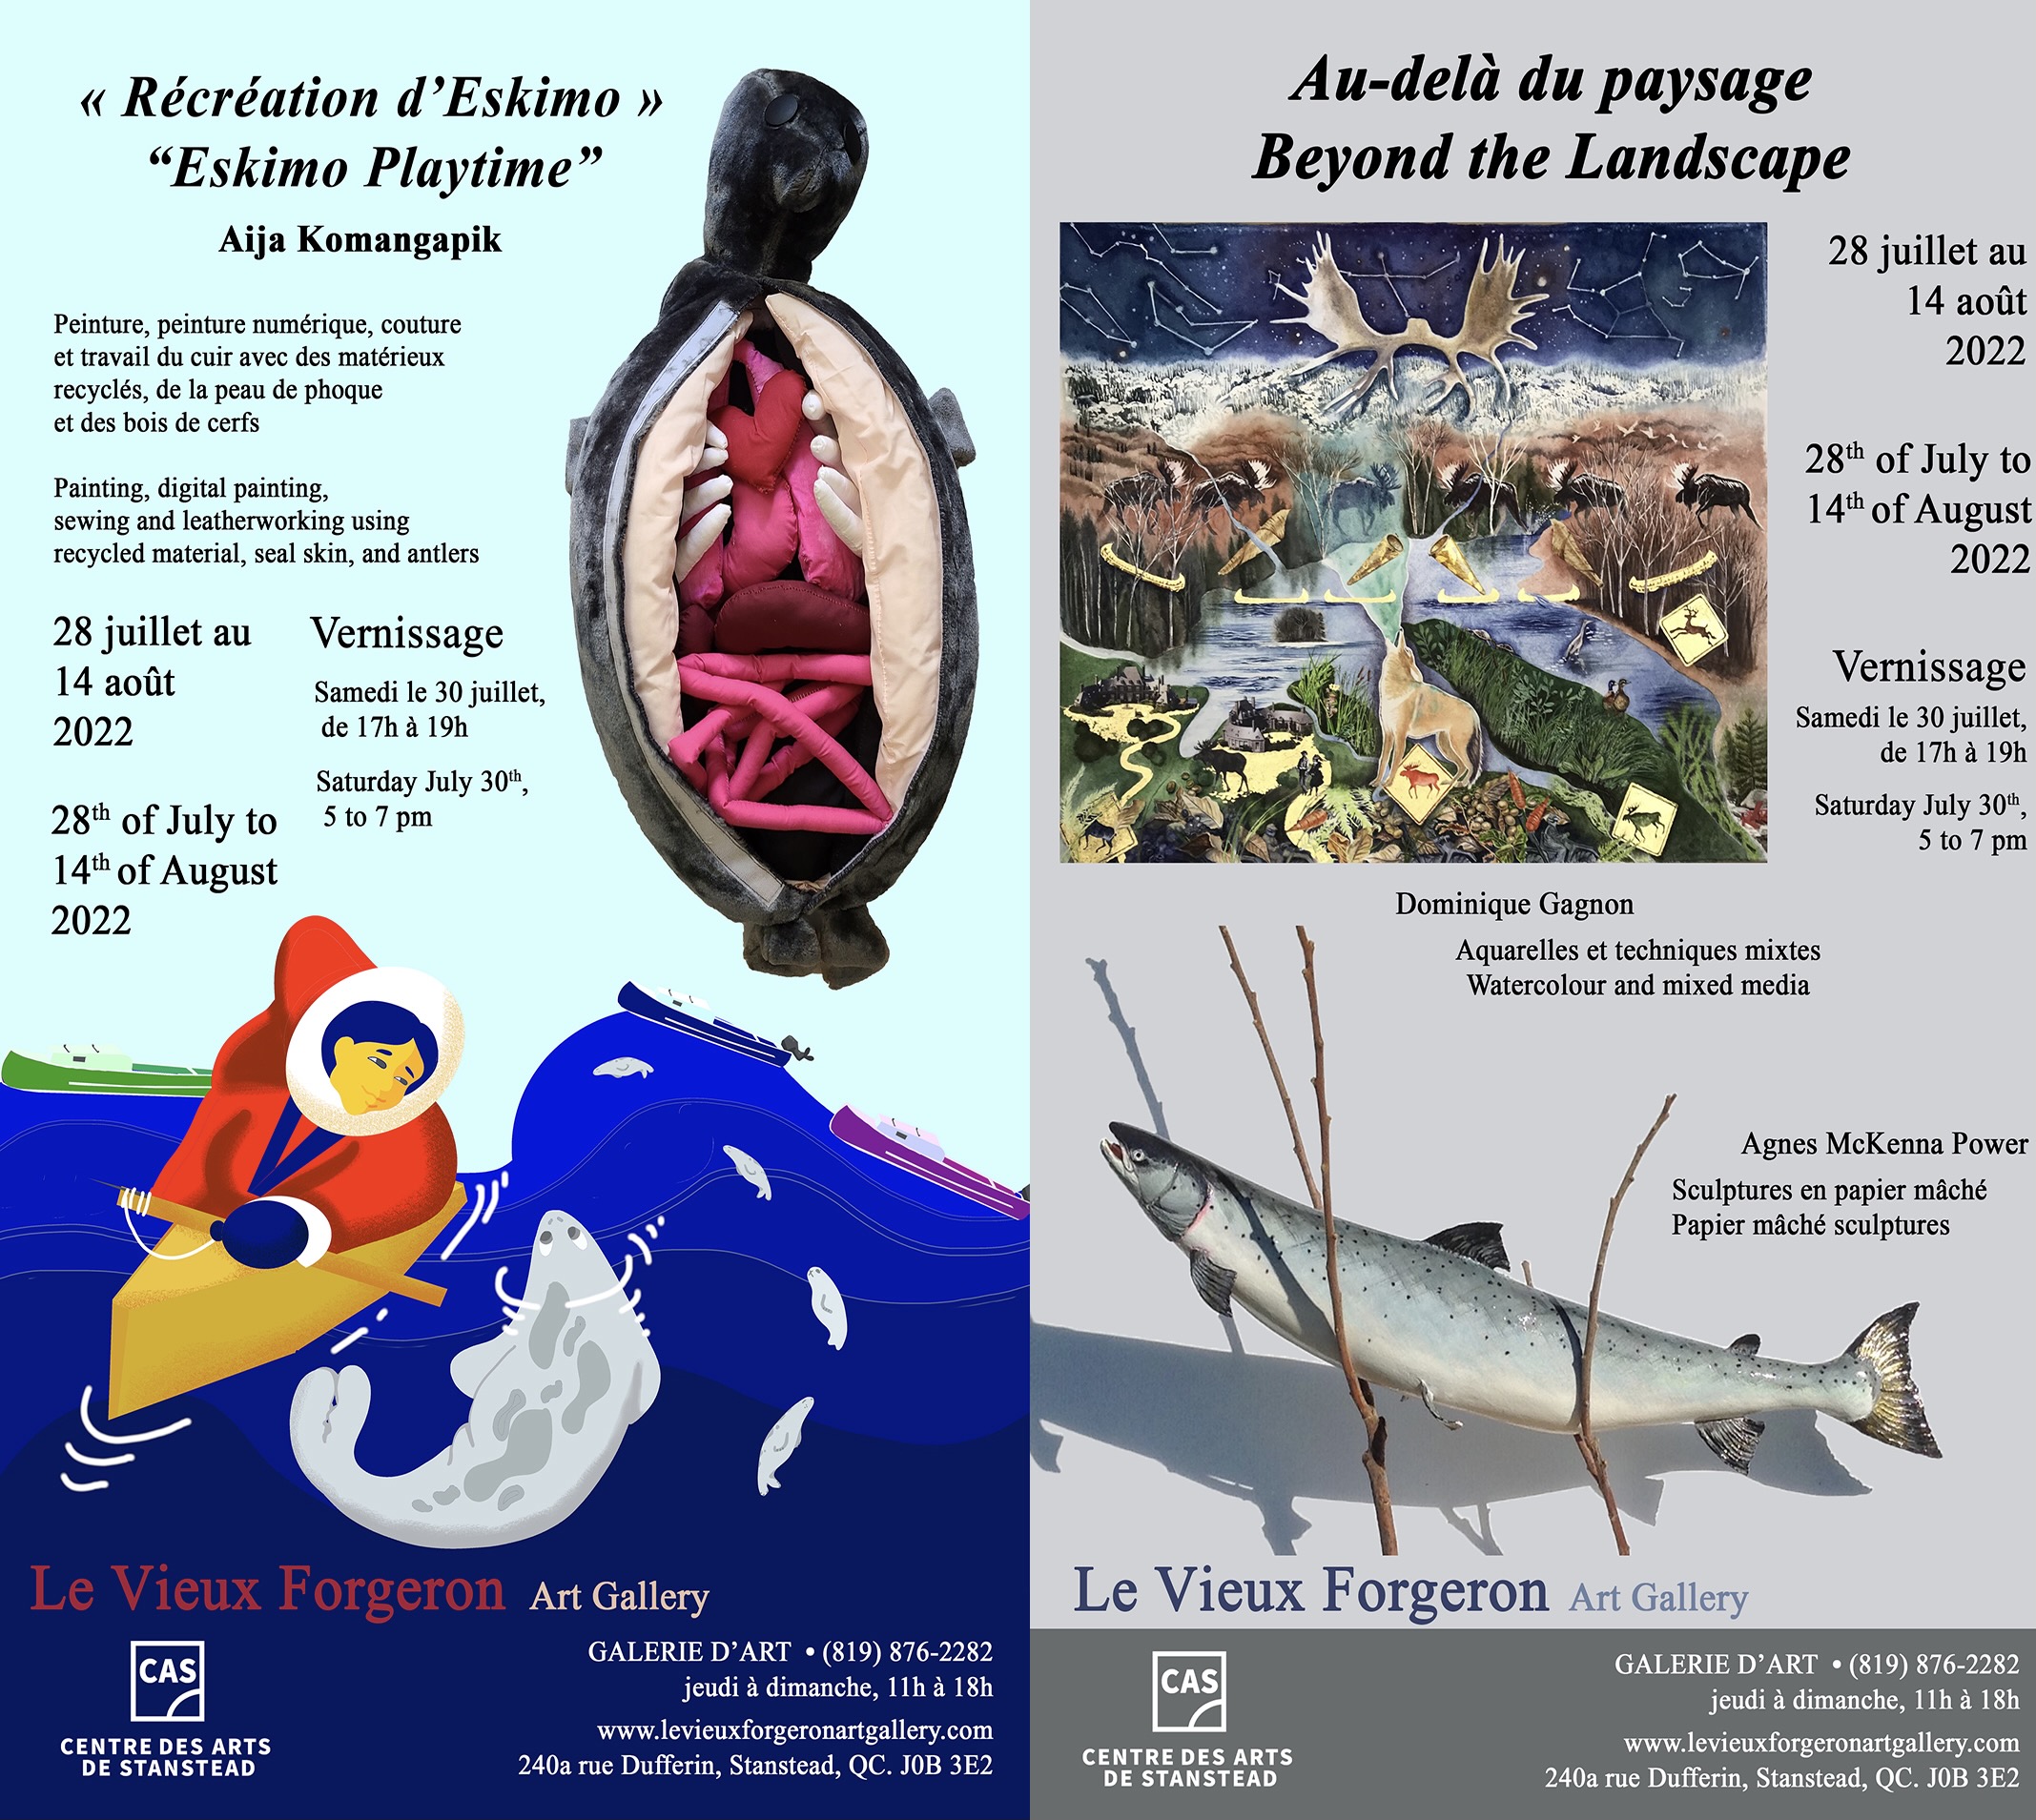 Third exhibition of the season at Le Vieux Forgeron